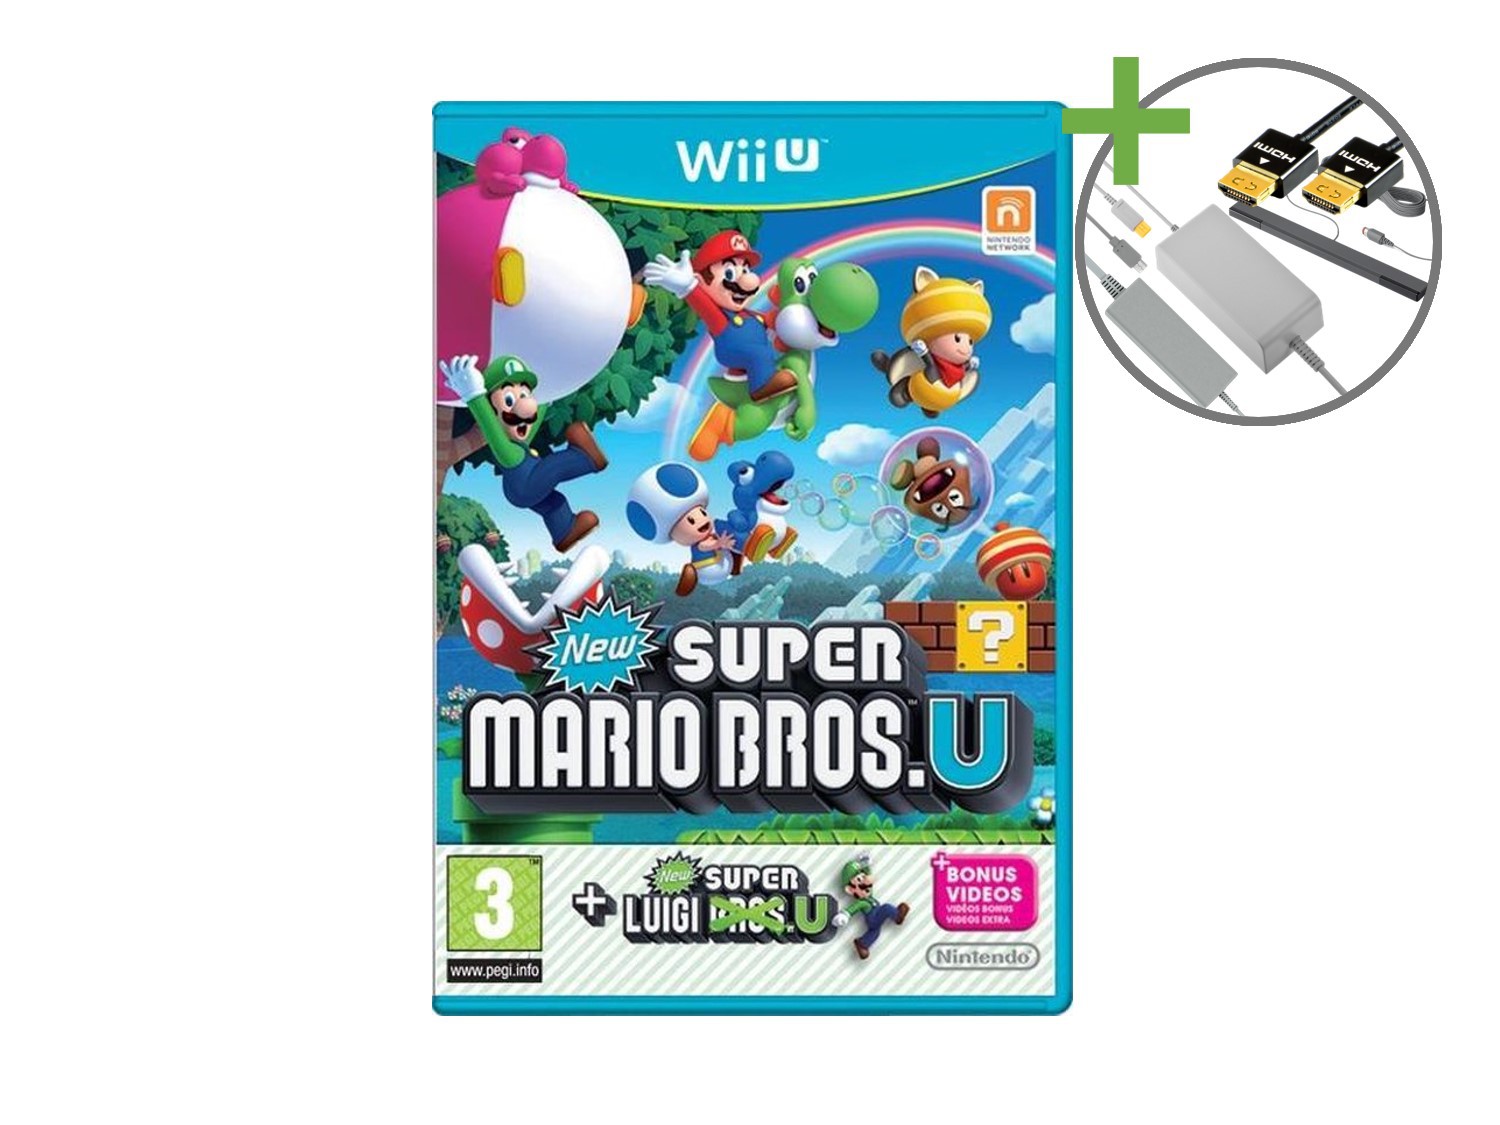 Nintendo Wii U Starter Pack - New Super Mario Bros. U + New Super Luigi U Edition - Wii U Hardware - 4